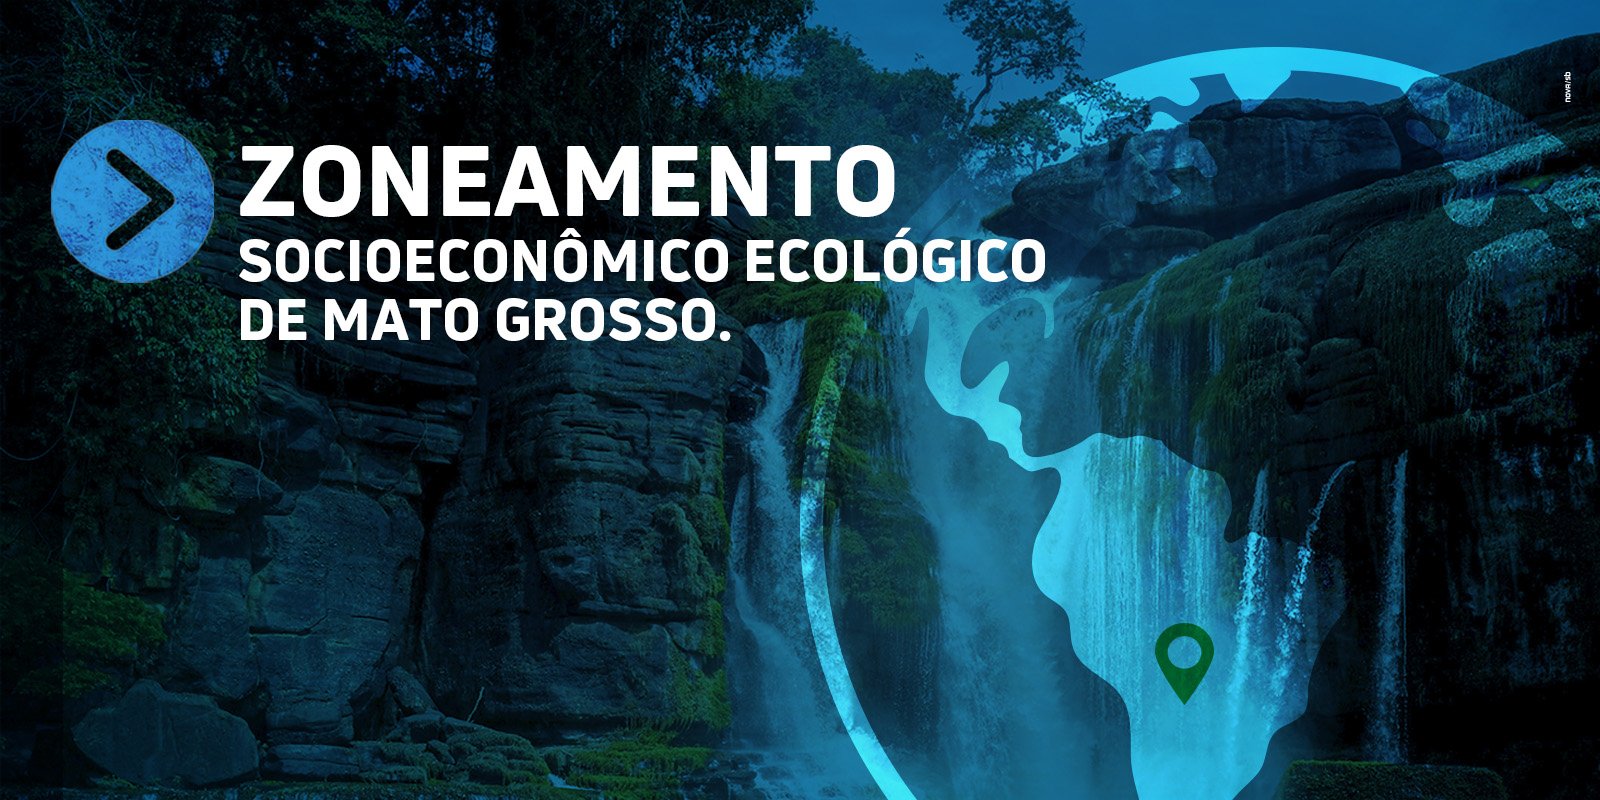 Featured image for “Zoneamento Socioeconômico Ecológico”